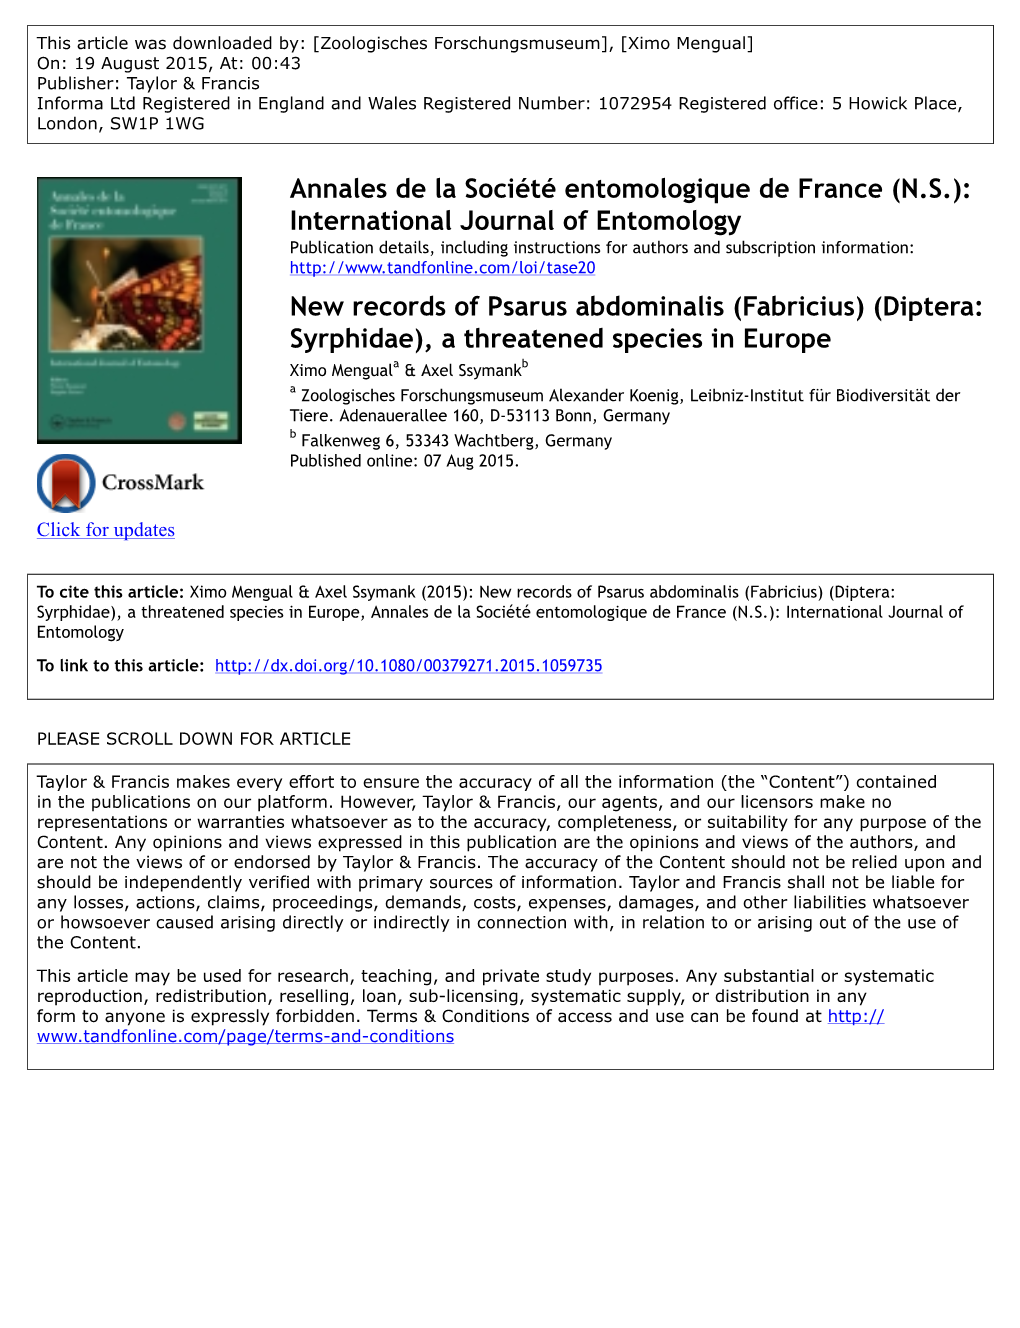 New Records of Psarus Abdominalis (Fabricius) (Diptera: Syrphidae), a Threatened Species in Europe